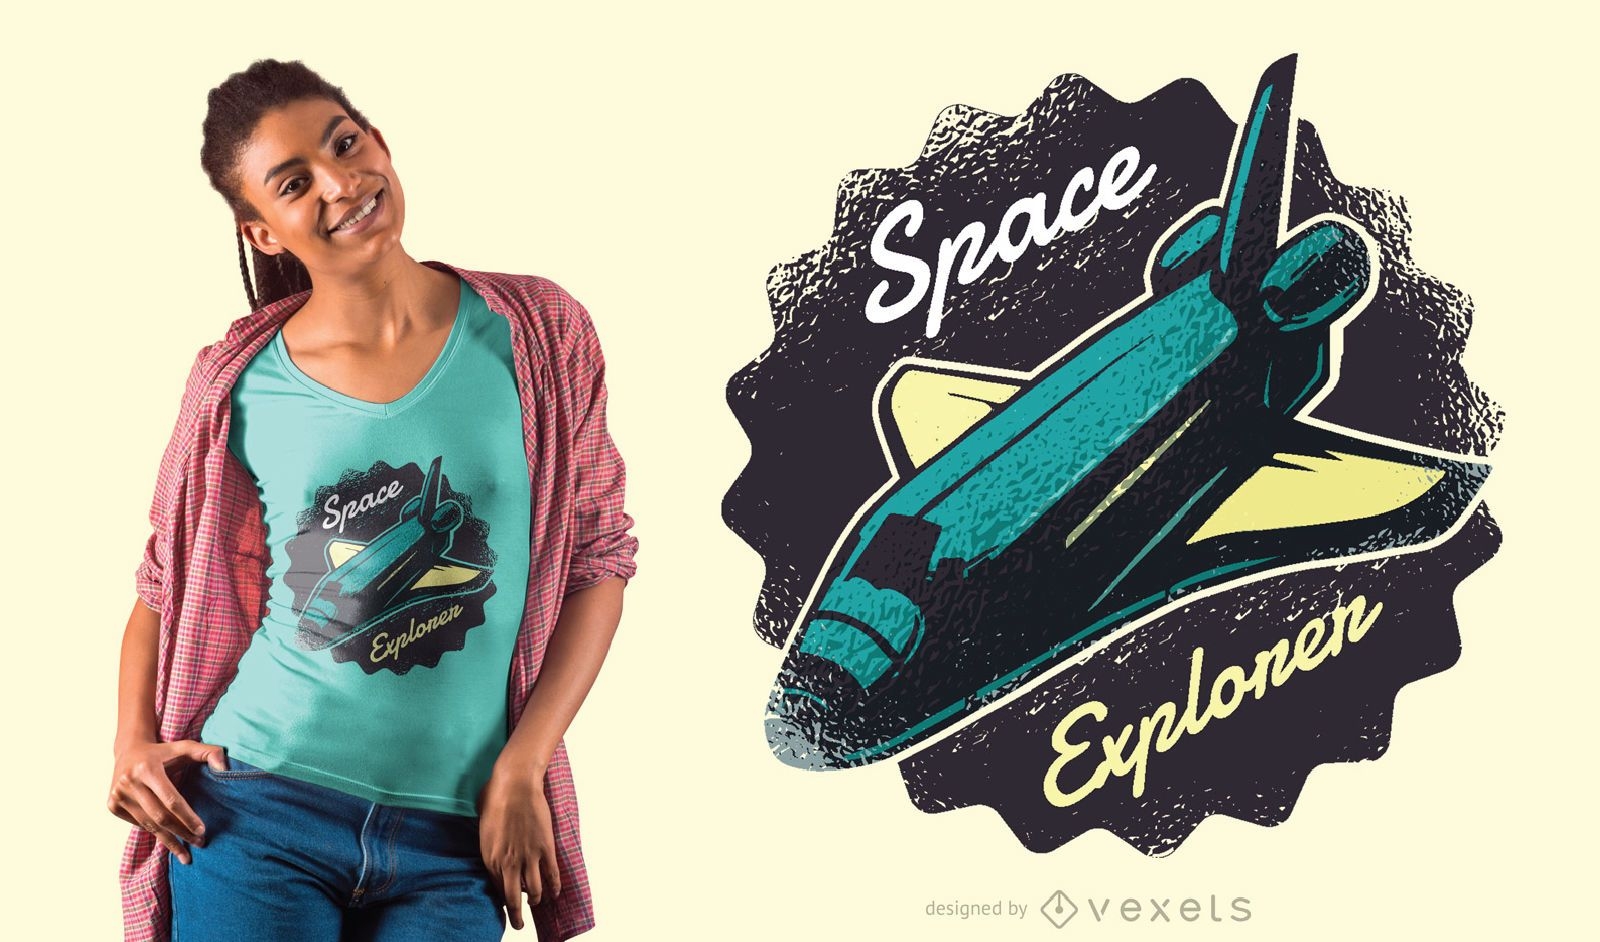 Space explorer shuttle t-shirt design